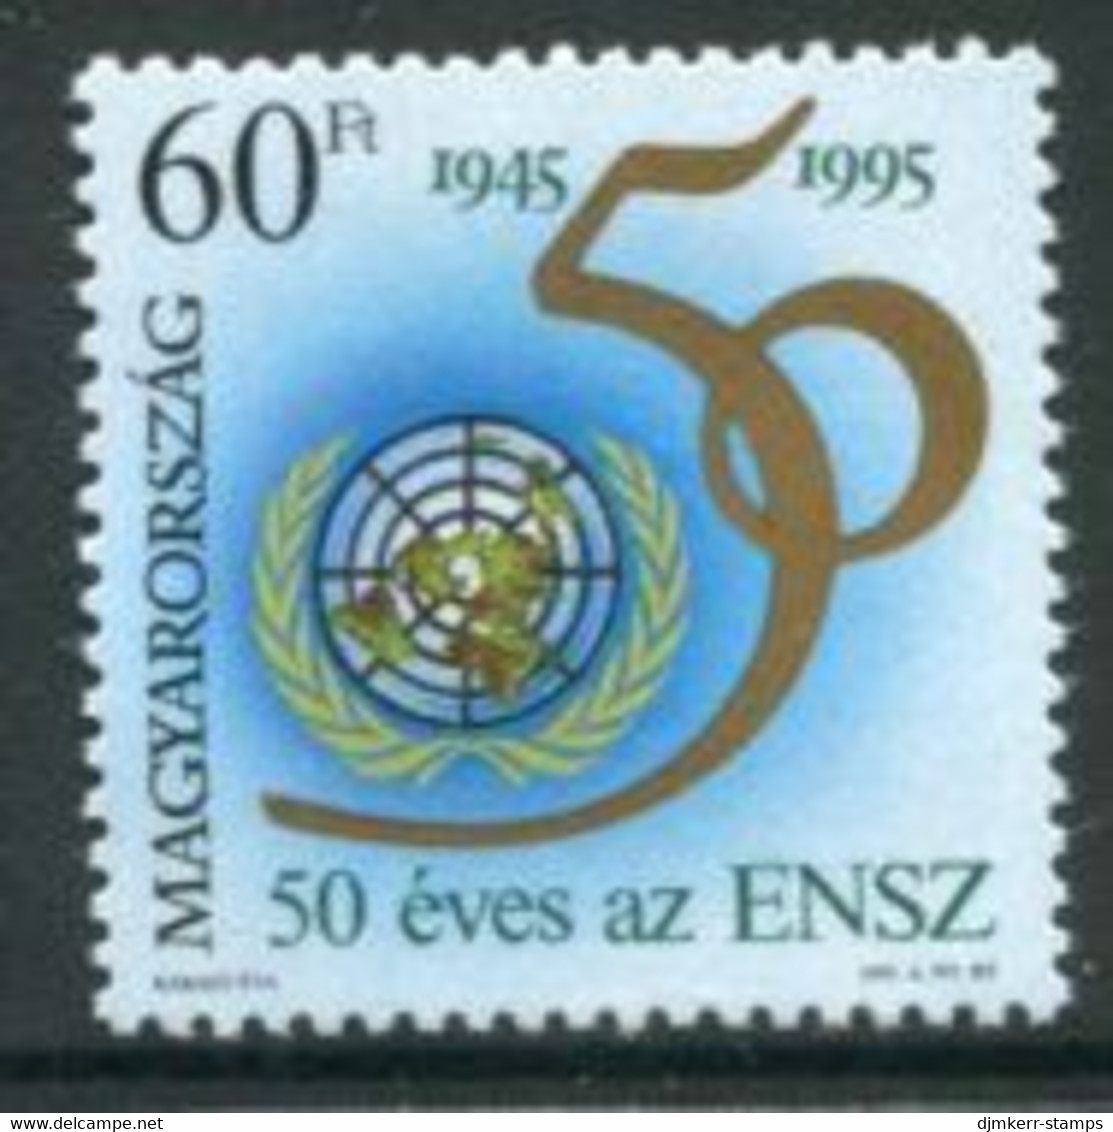 HUNGARY 1995 UNO Anniversary MNH / **.  Michel  4361 - Nuovi